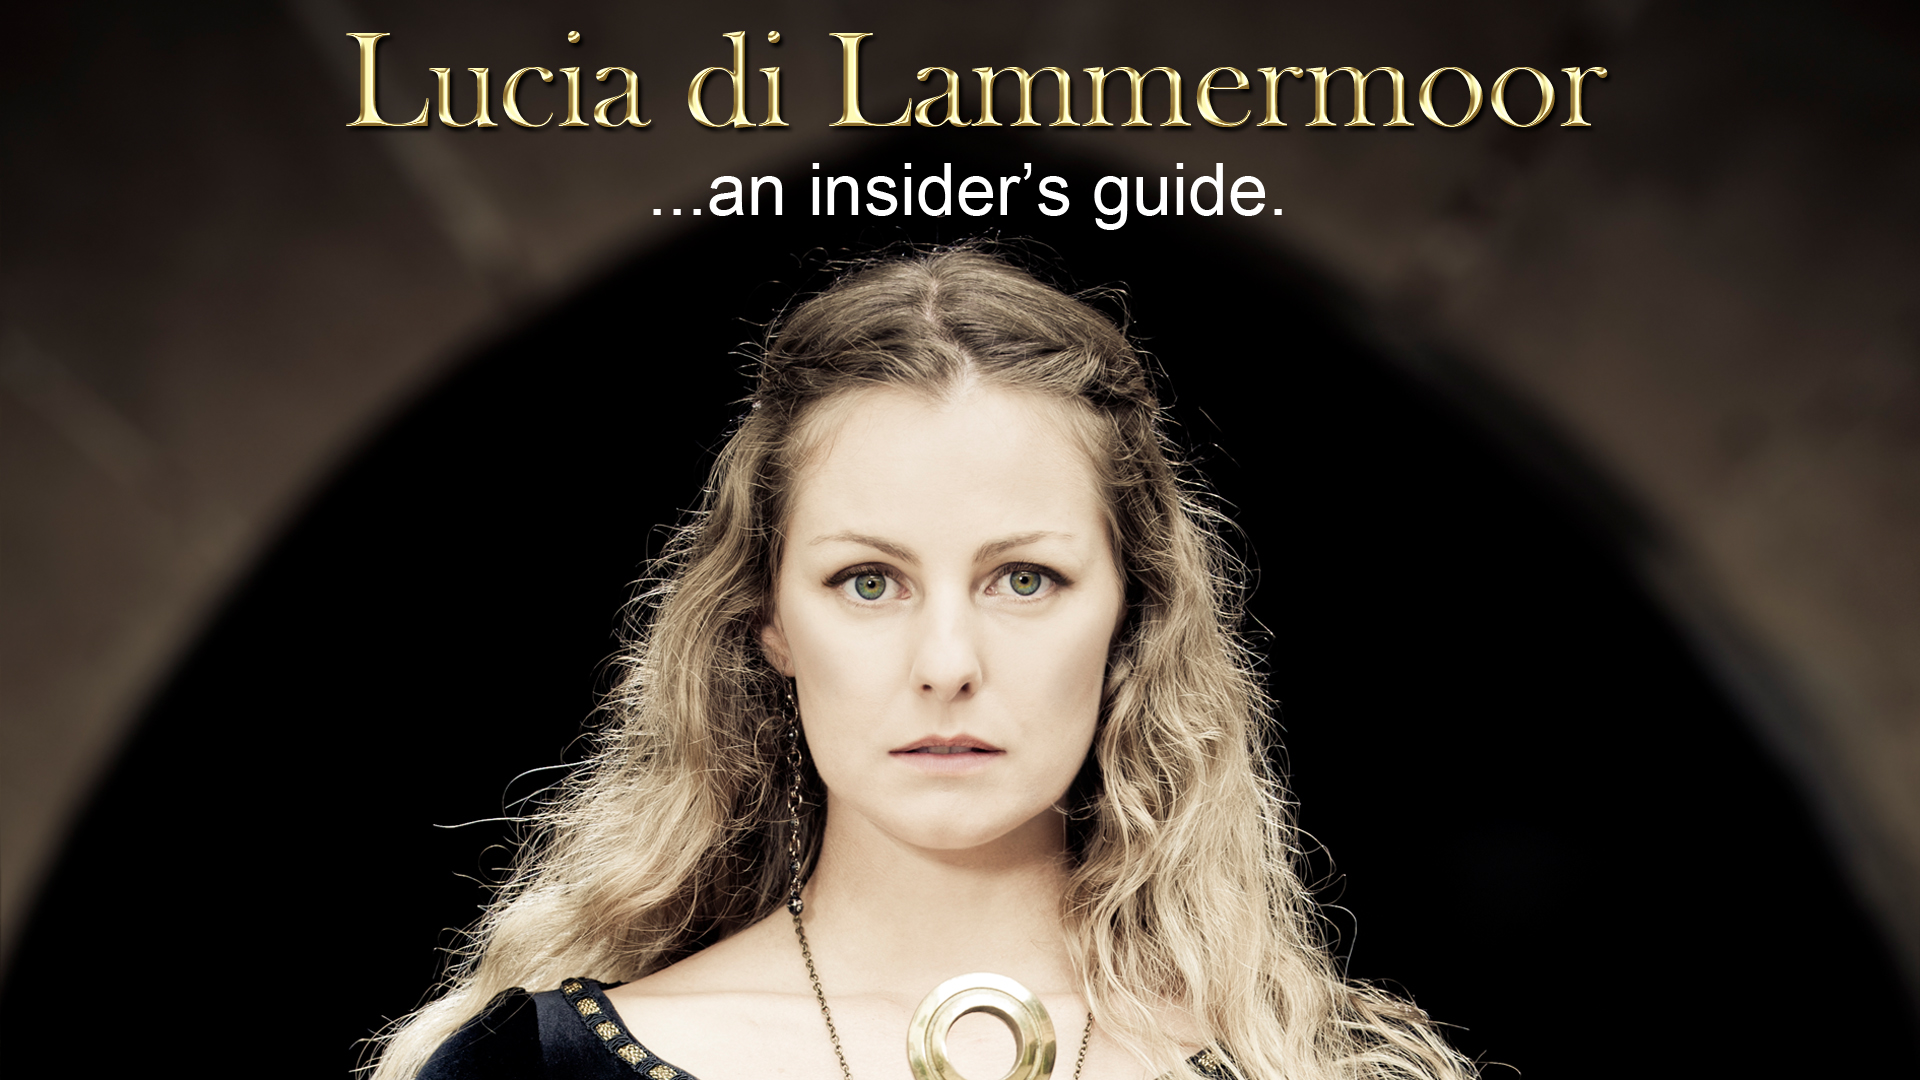 Lucia di Lammermoor...an insider's guide